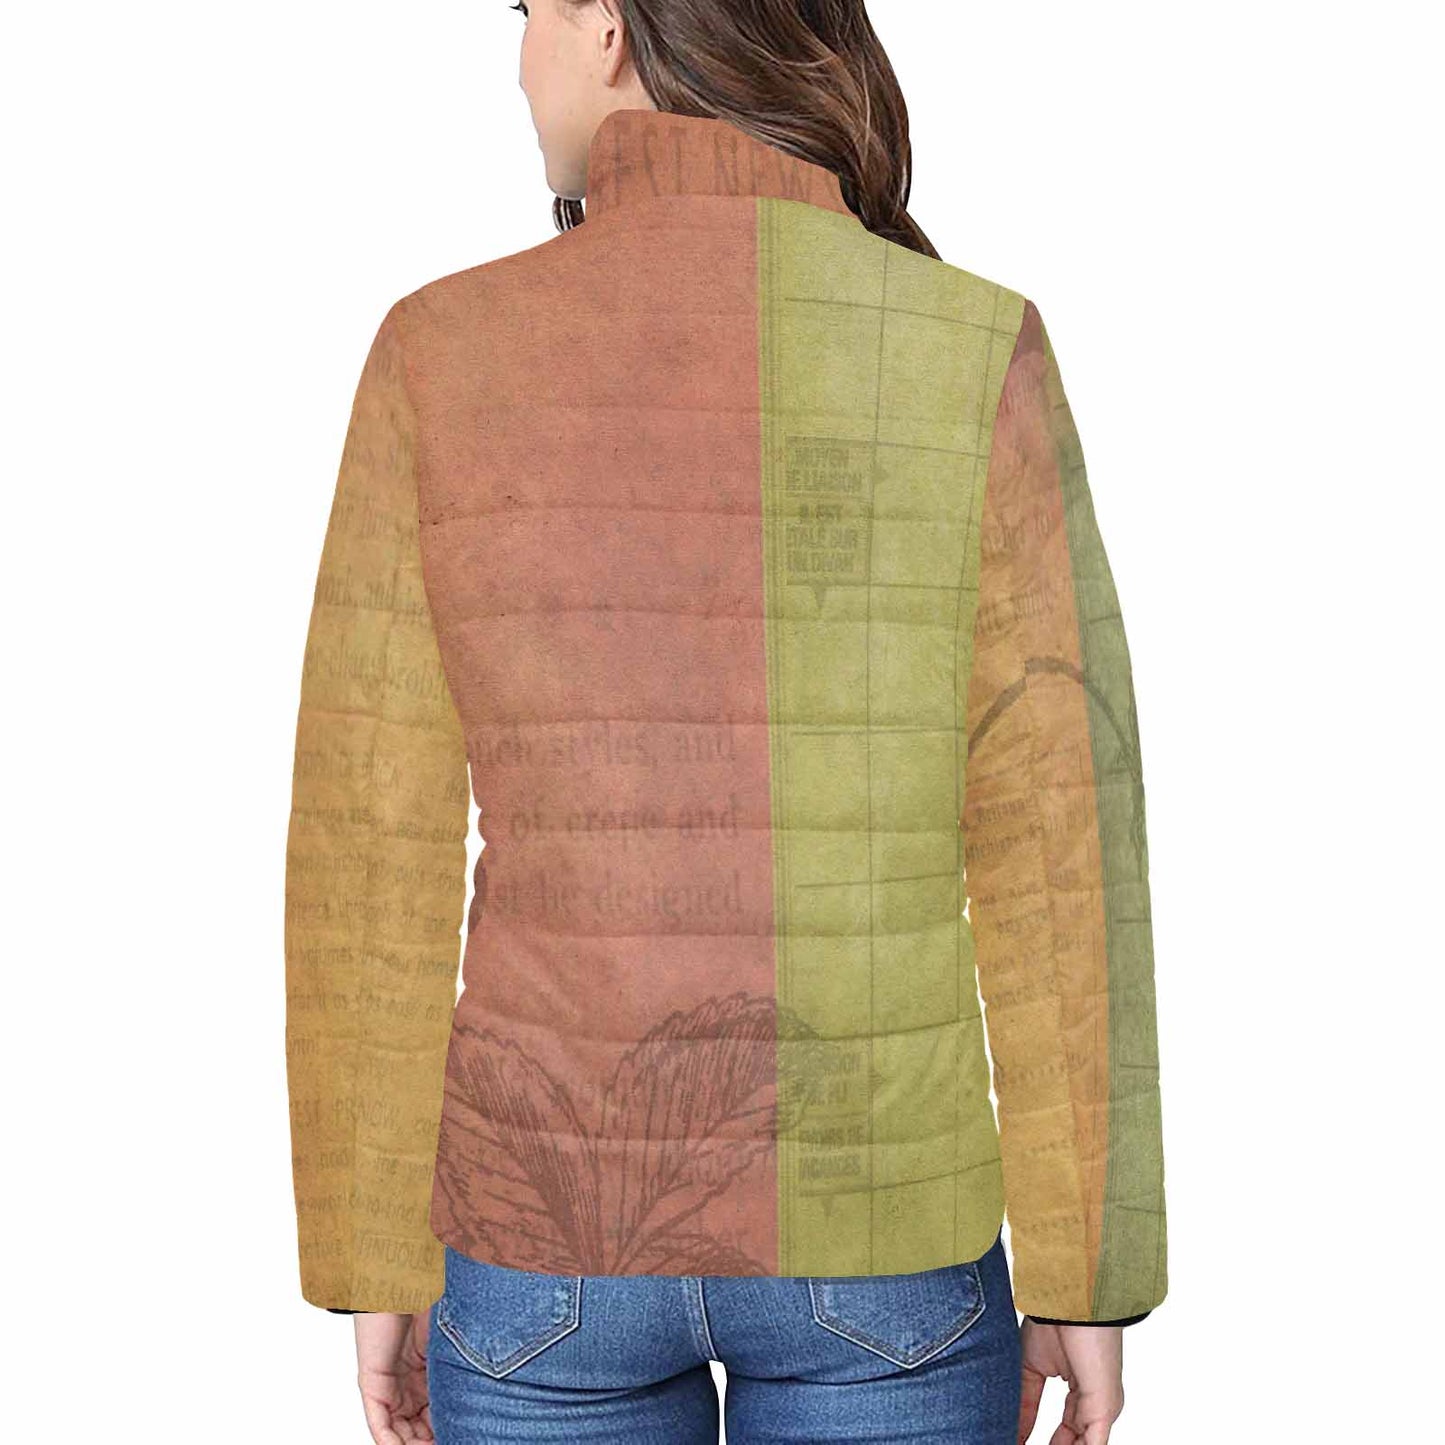 Antique general print quilted jacket, design 31